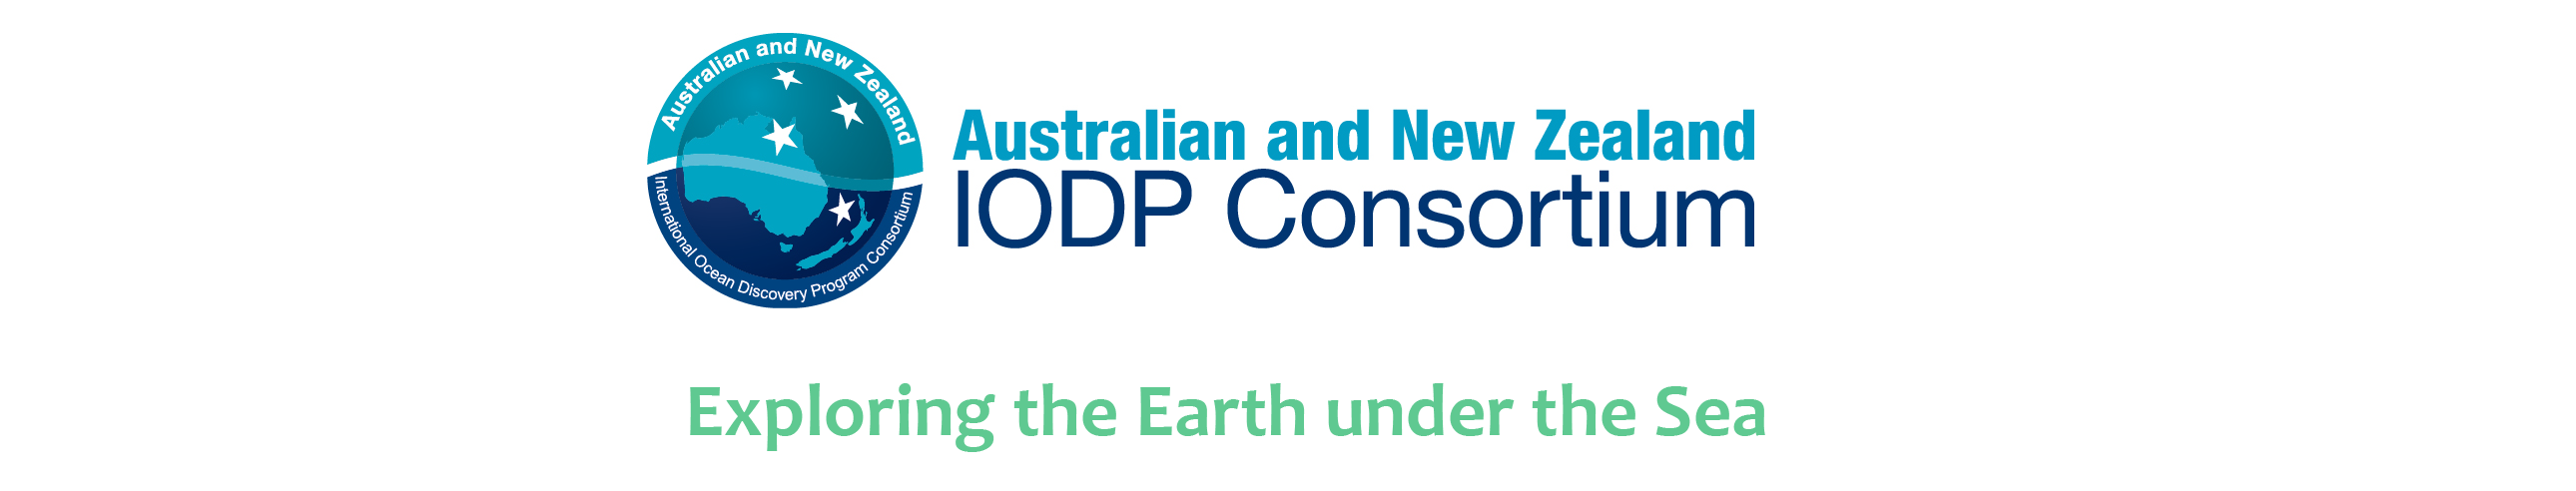 Australian and New Zealand IODP Consortium